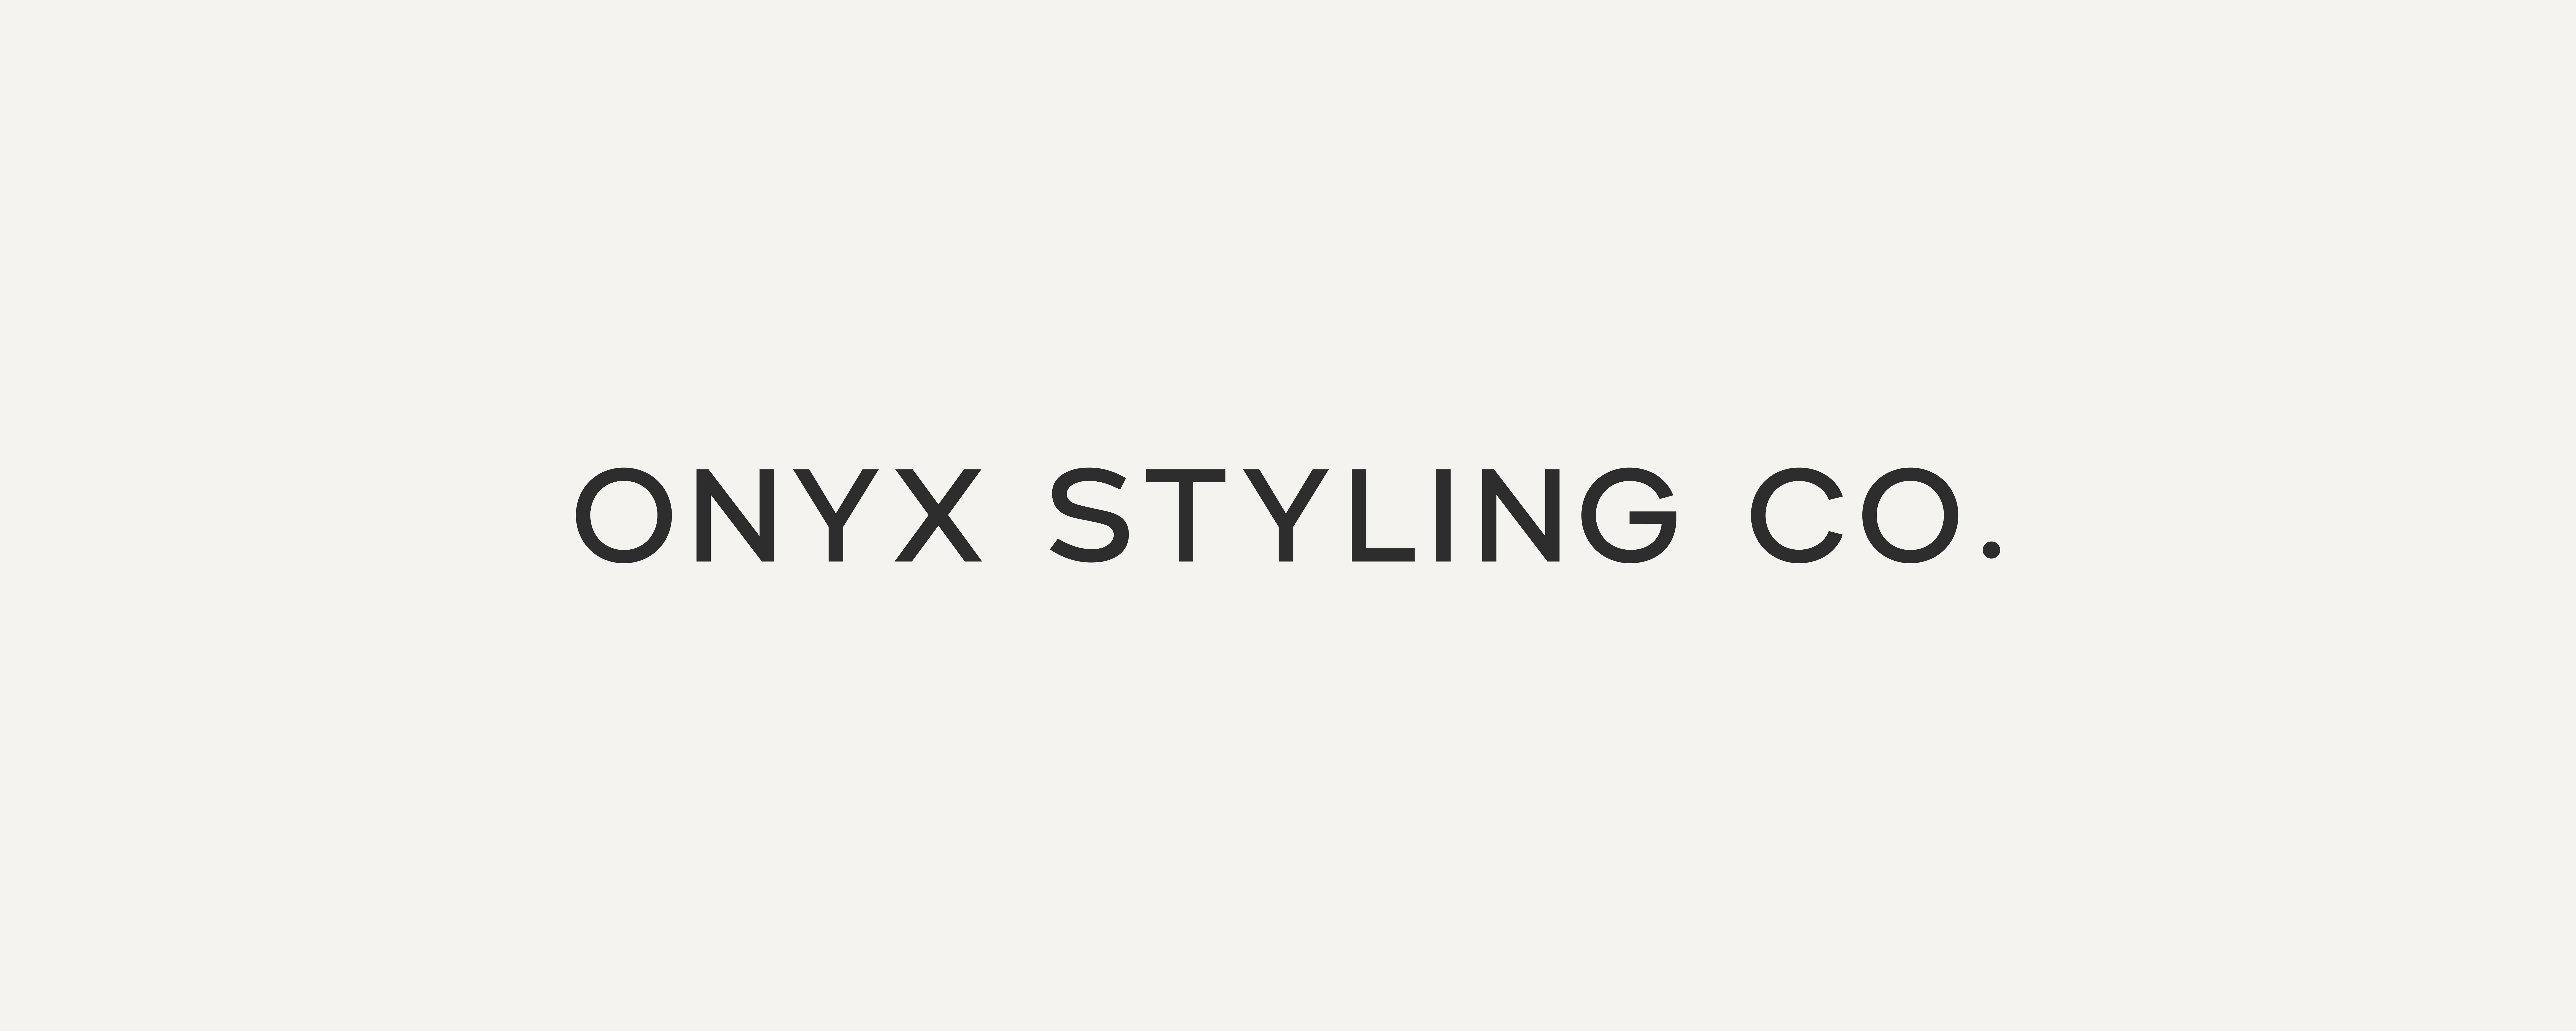 Sleek Logo Design for Onyx Styling Co